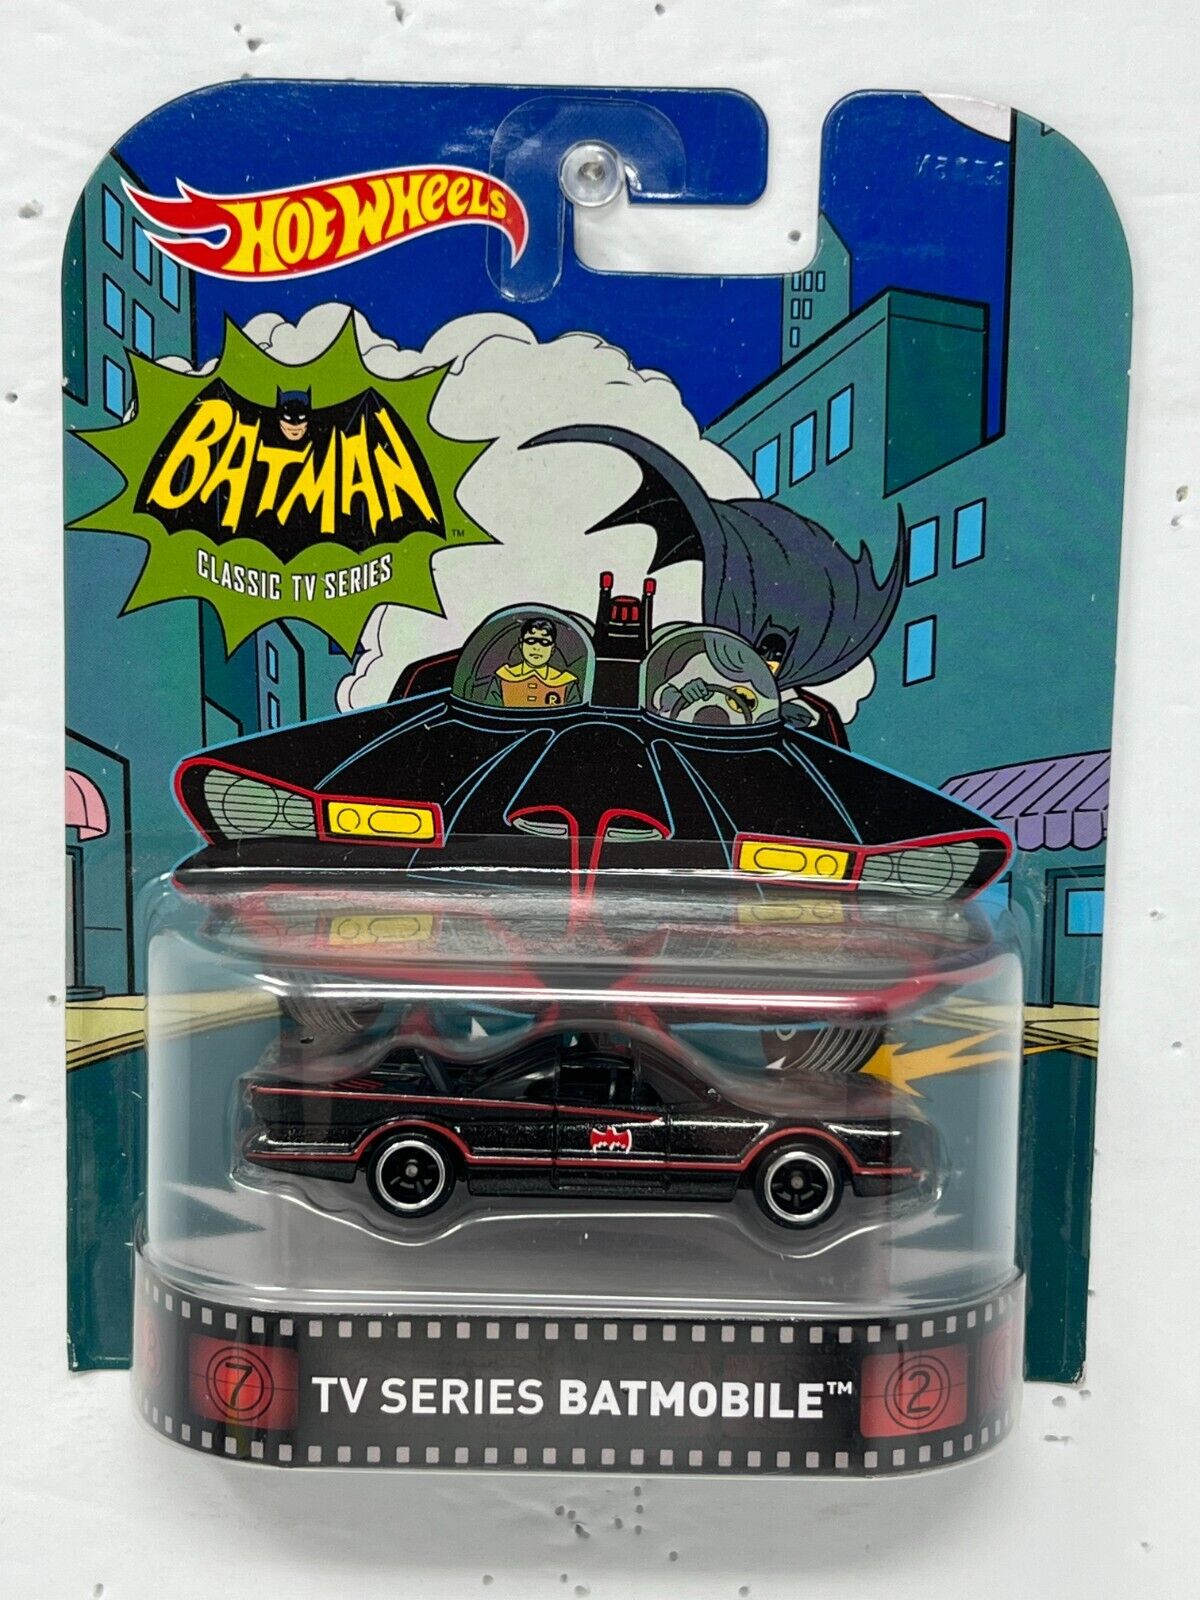 Hot Wheels Retro Entertainment Batman Classic TV Series Batmobile 1:64 Diecast